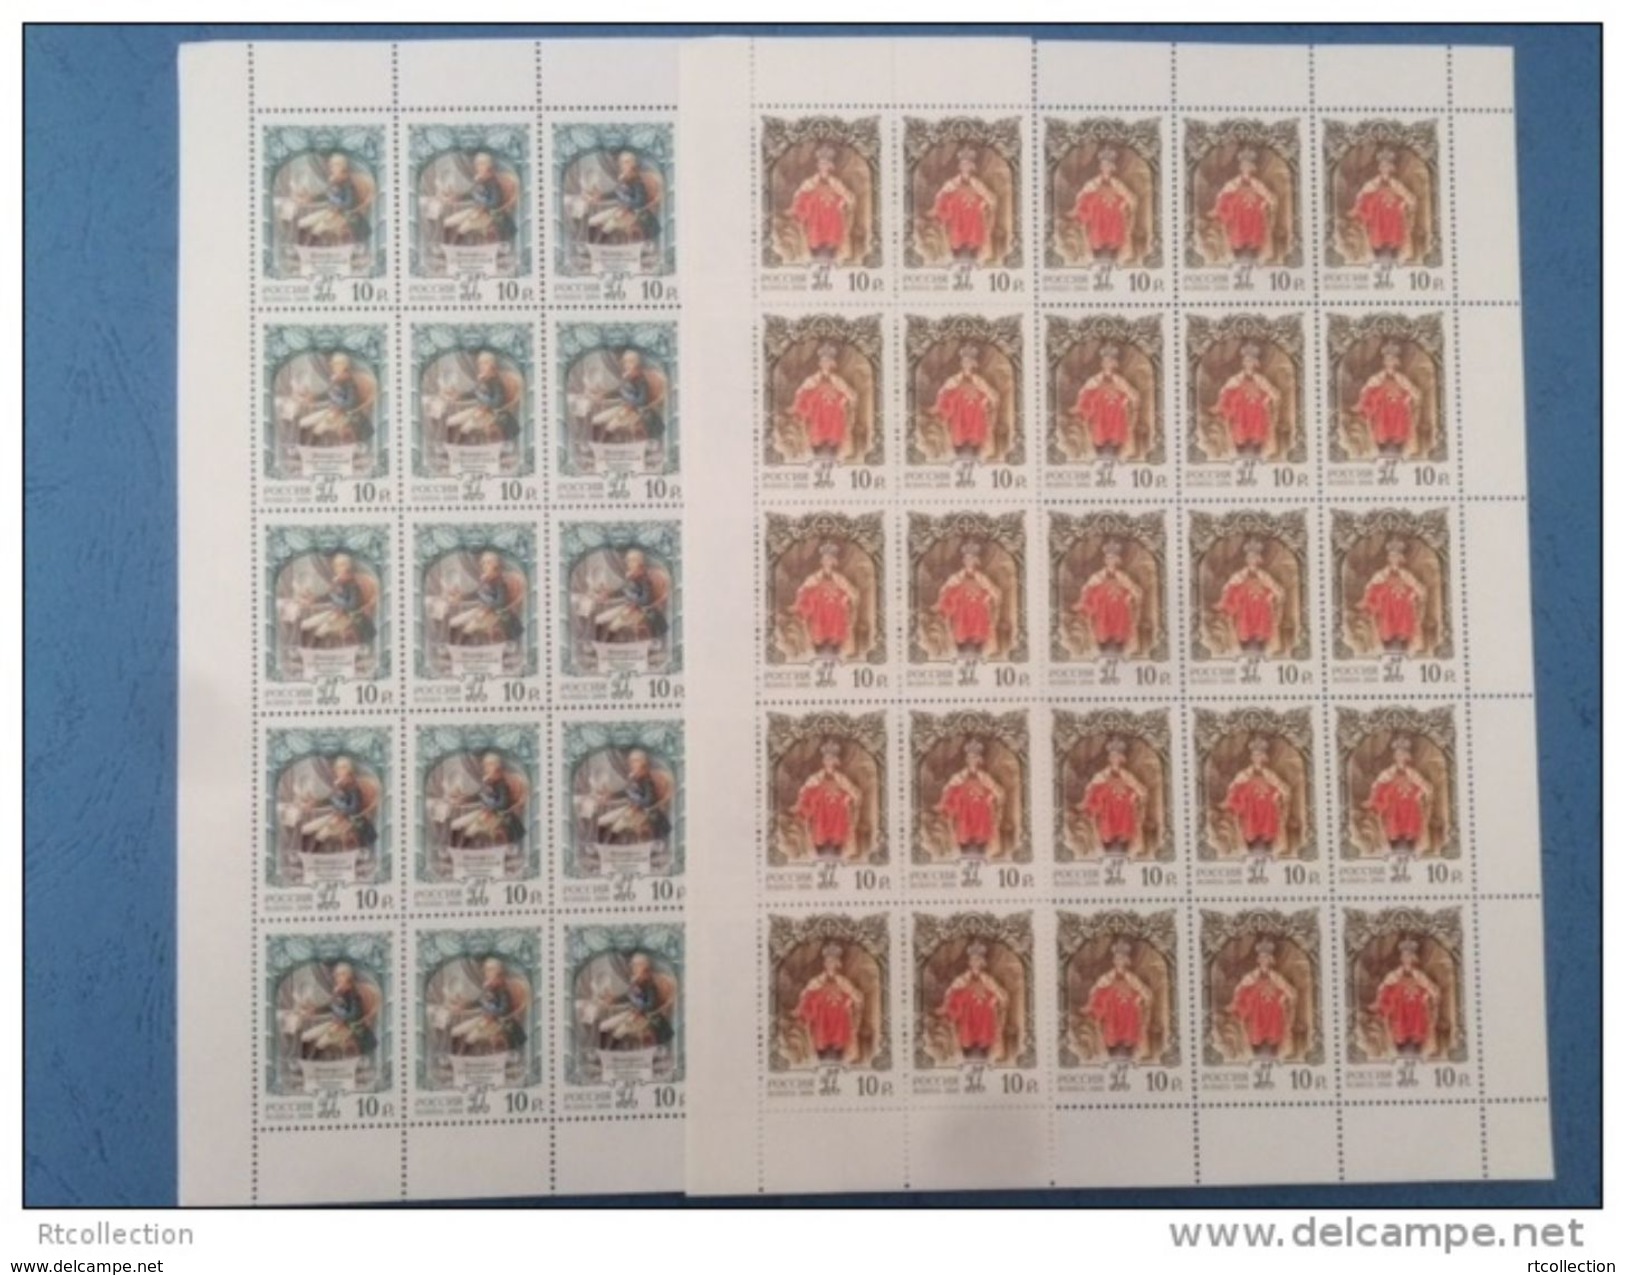 Russia 2004 Sheet 250Y Emperor Paul I Art Portrait Royals Royalty People Celebrations Stamps Mi 1206-07 SC 6862-63 - Hojas Completas